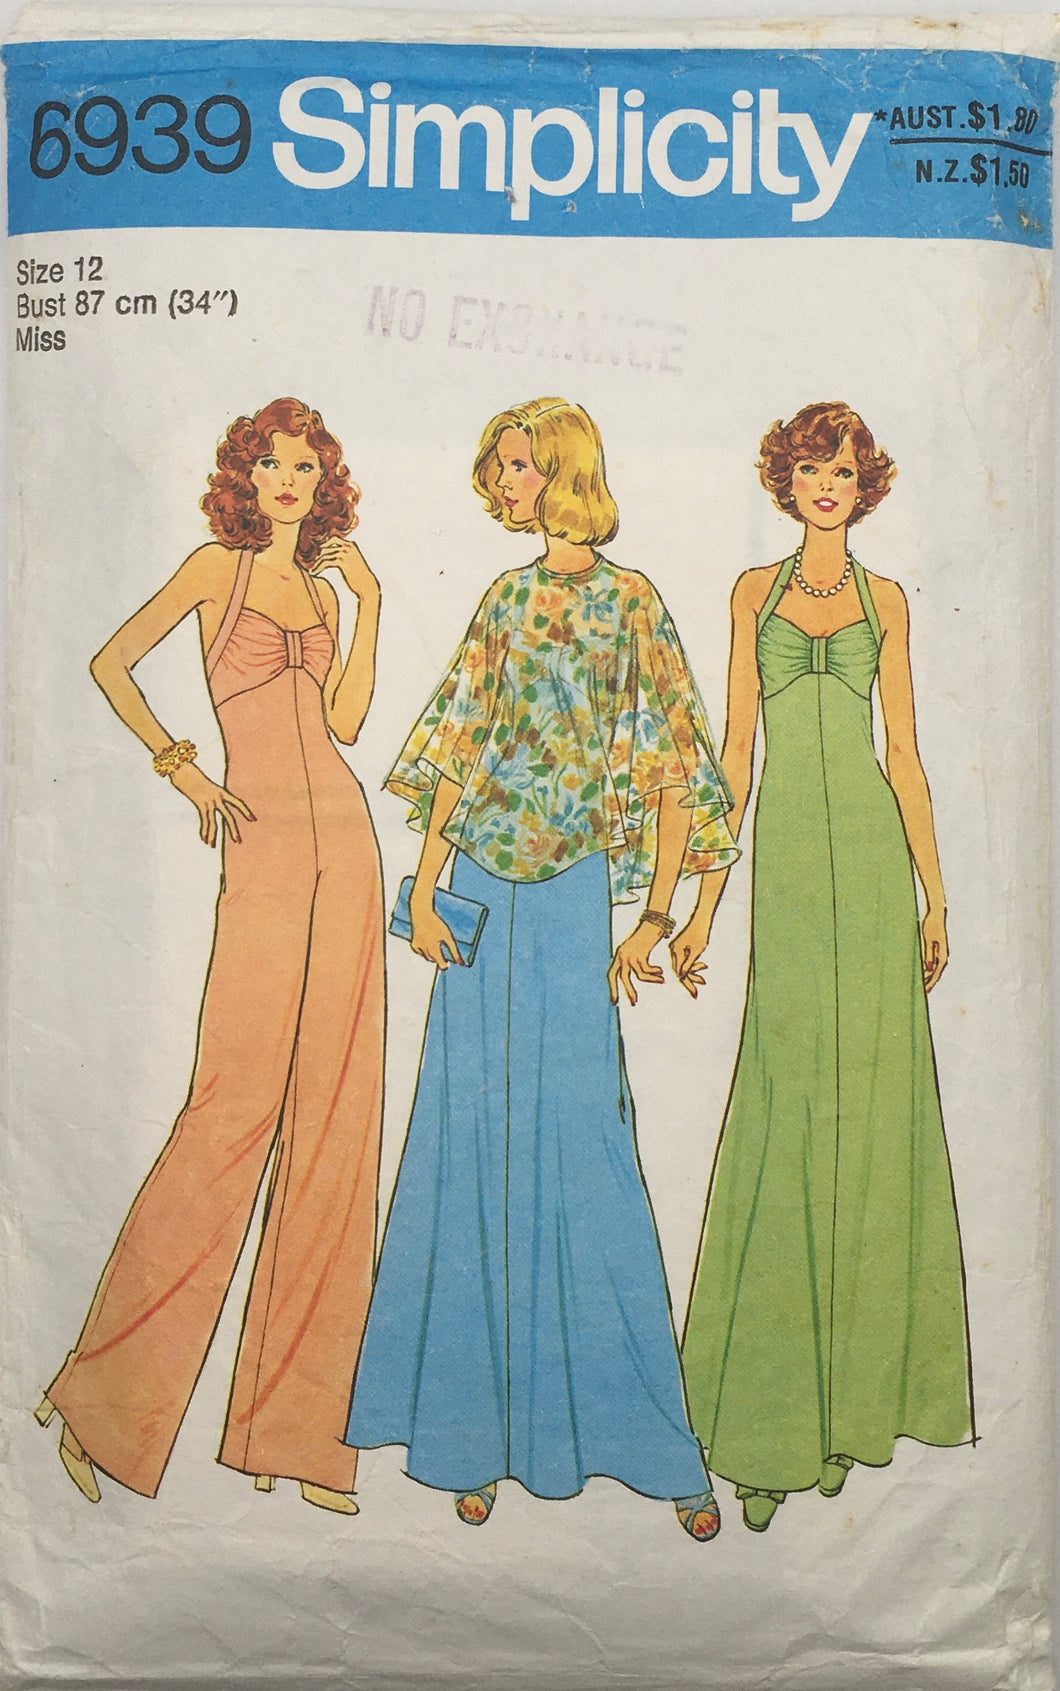 1977 Vintage Sewing Pattern: Simplicity 6939